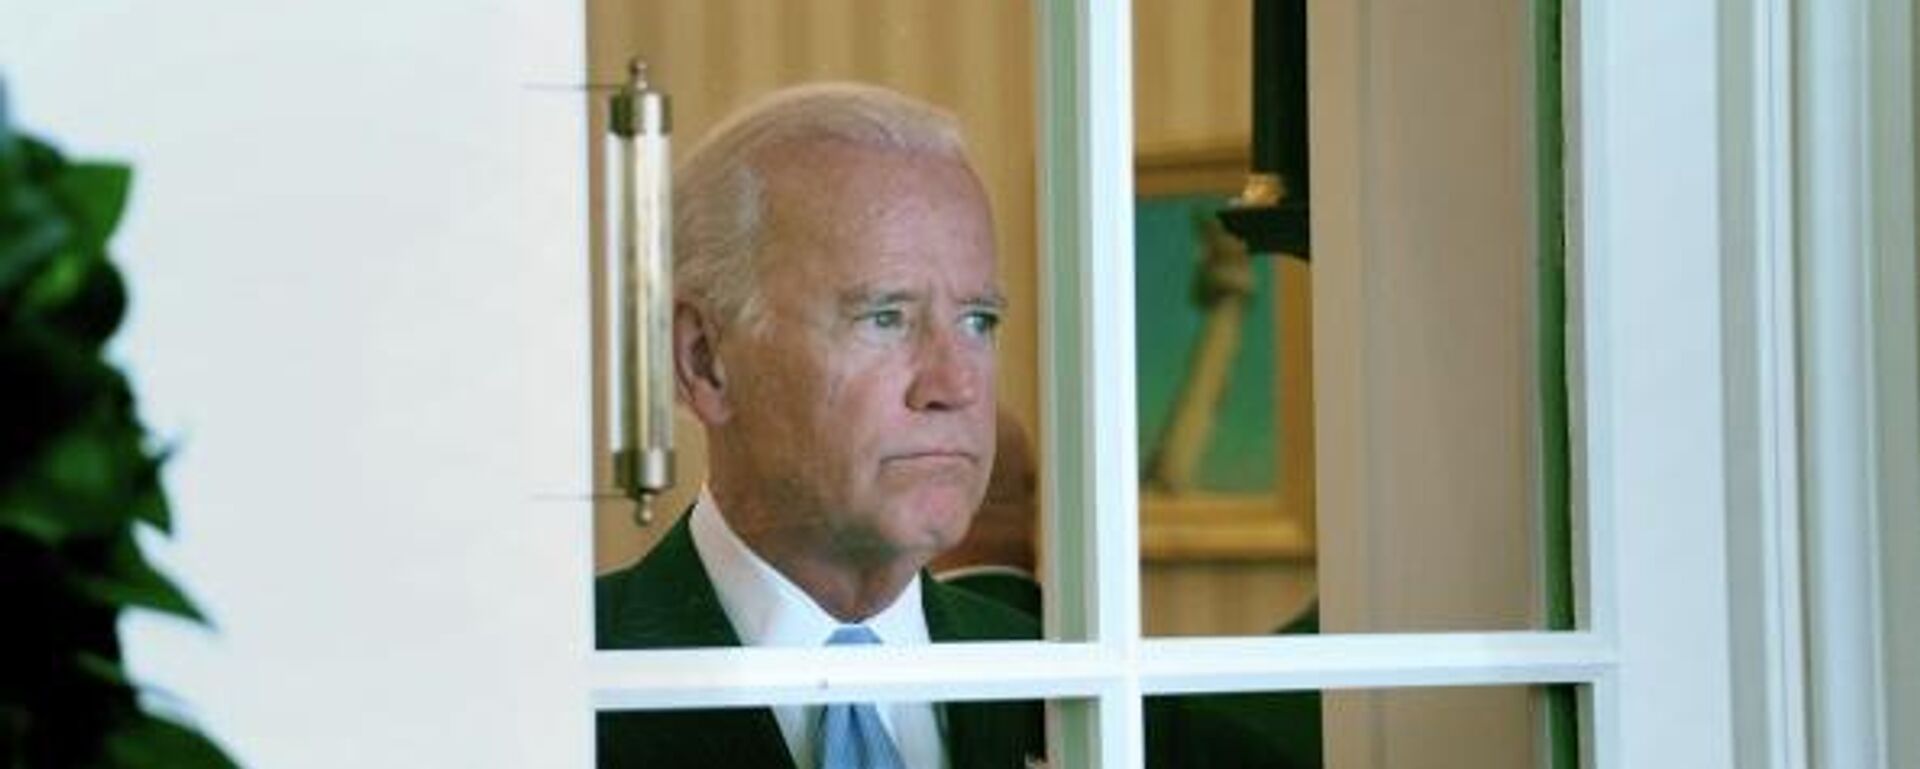 Sad Joe Biden photo from 2014. Source of endless internet memes. - Sputnik International, 1920, 24.06.2022